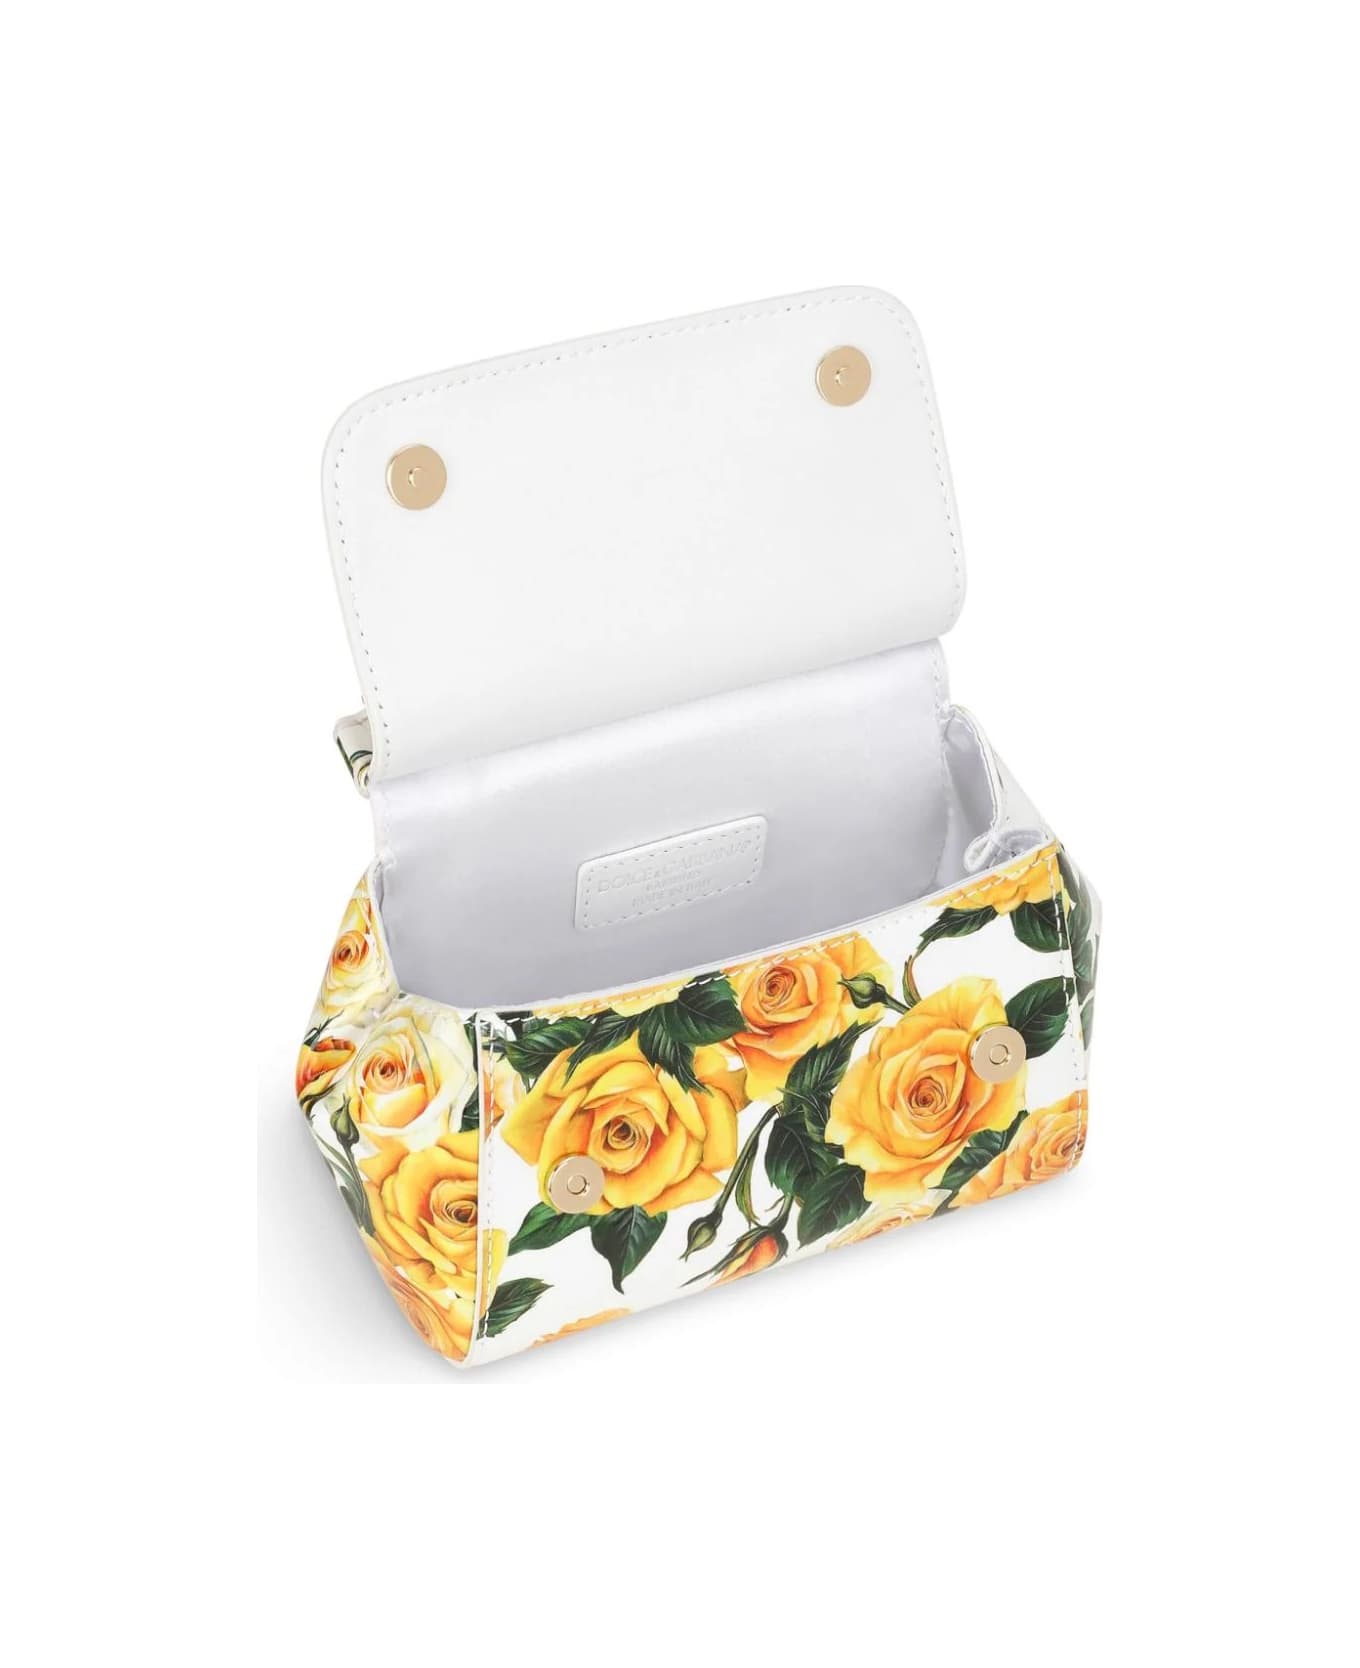 Dolce & Gabbana Sicily Mini Hand Bag With Yellow Rose Print - Yellow